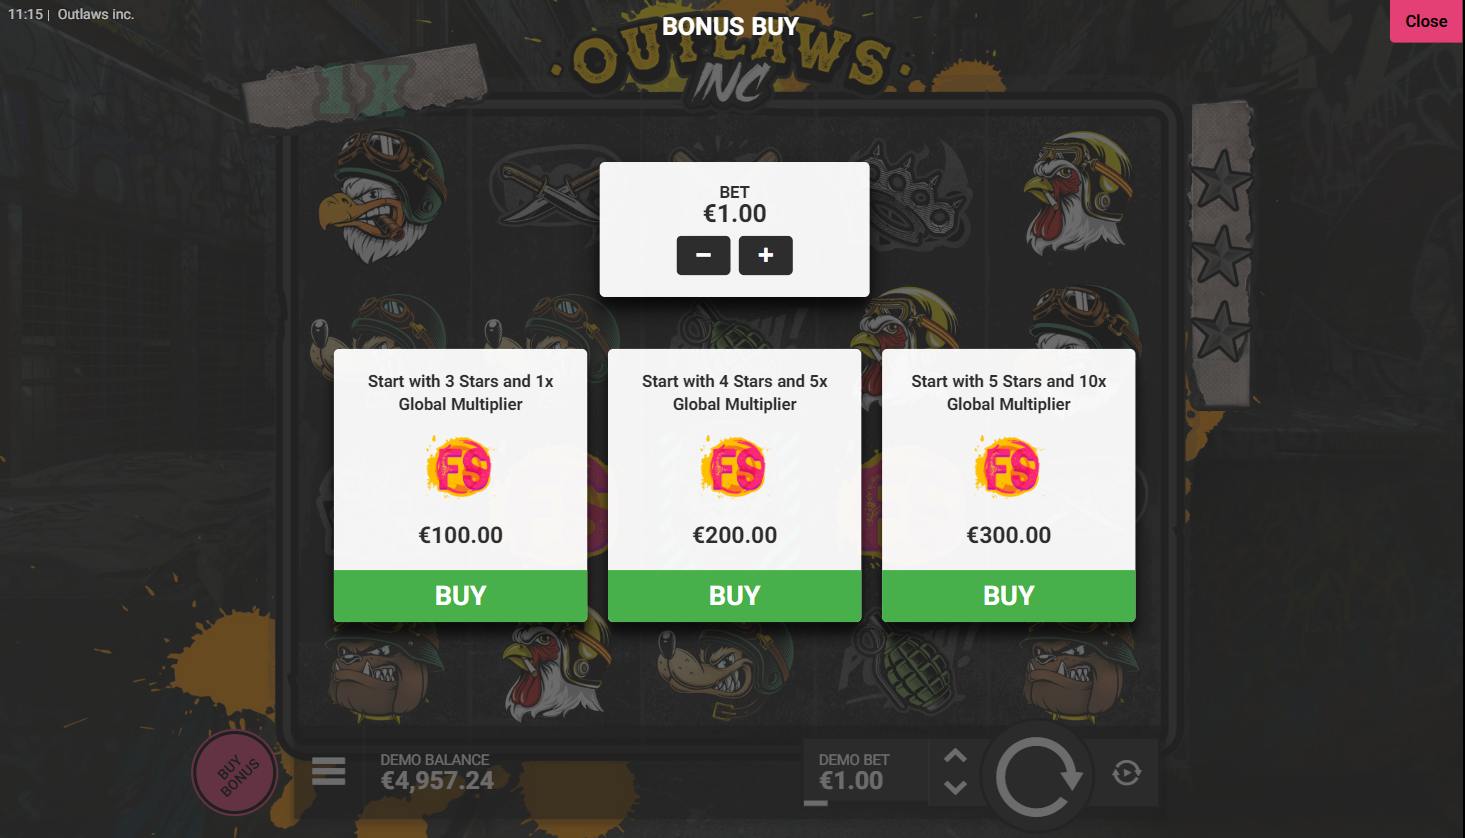 Outlaws Inc Bonus Buy Options